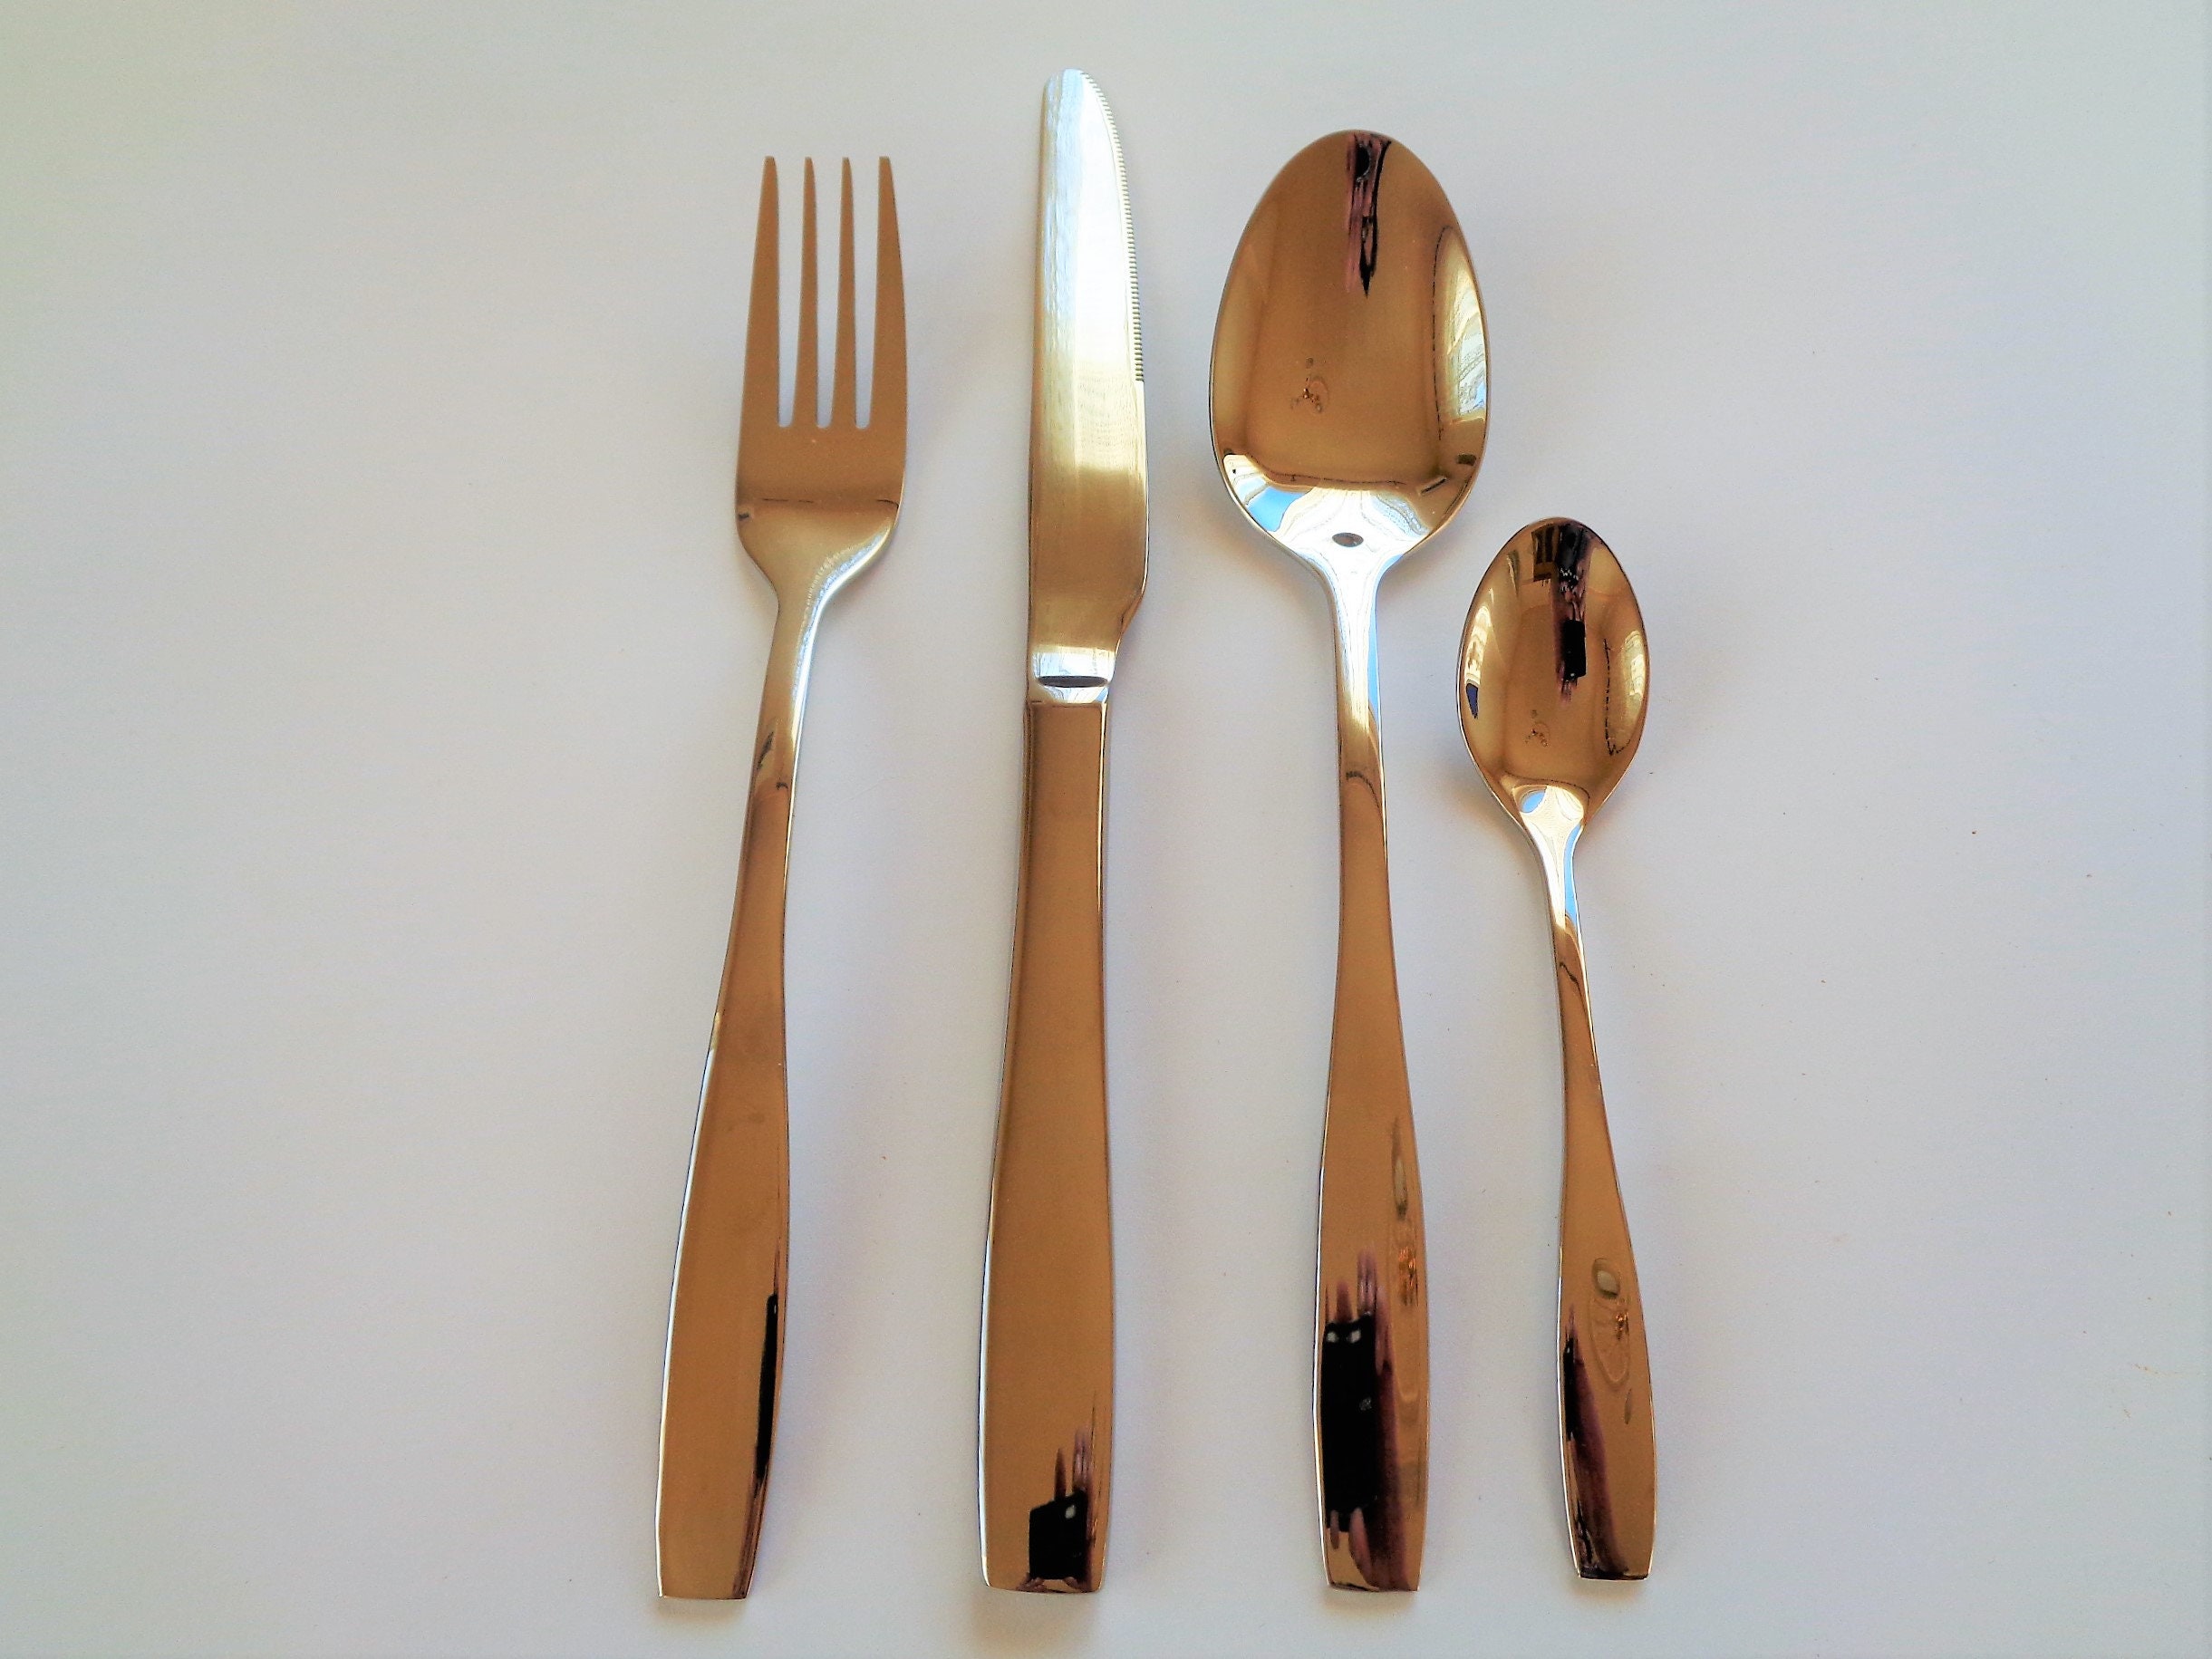 Fontignac Luxury Cutlery Dinner Set – Yorkshire Trading Company